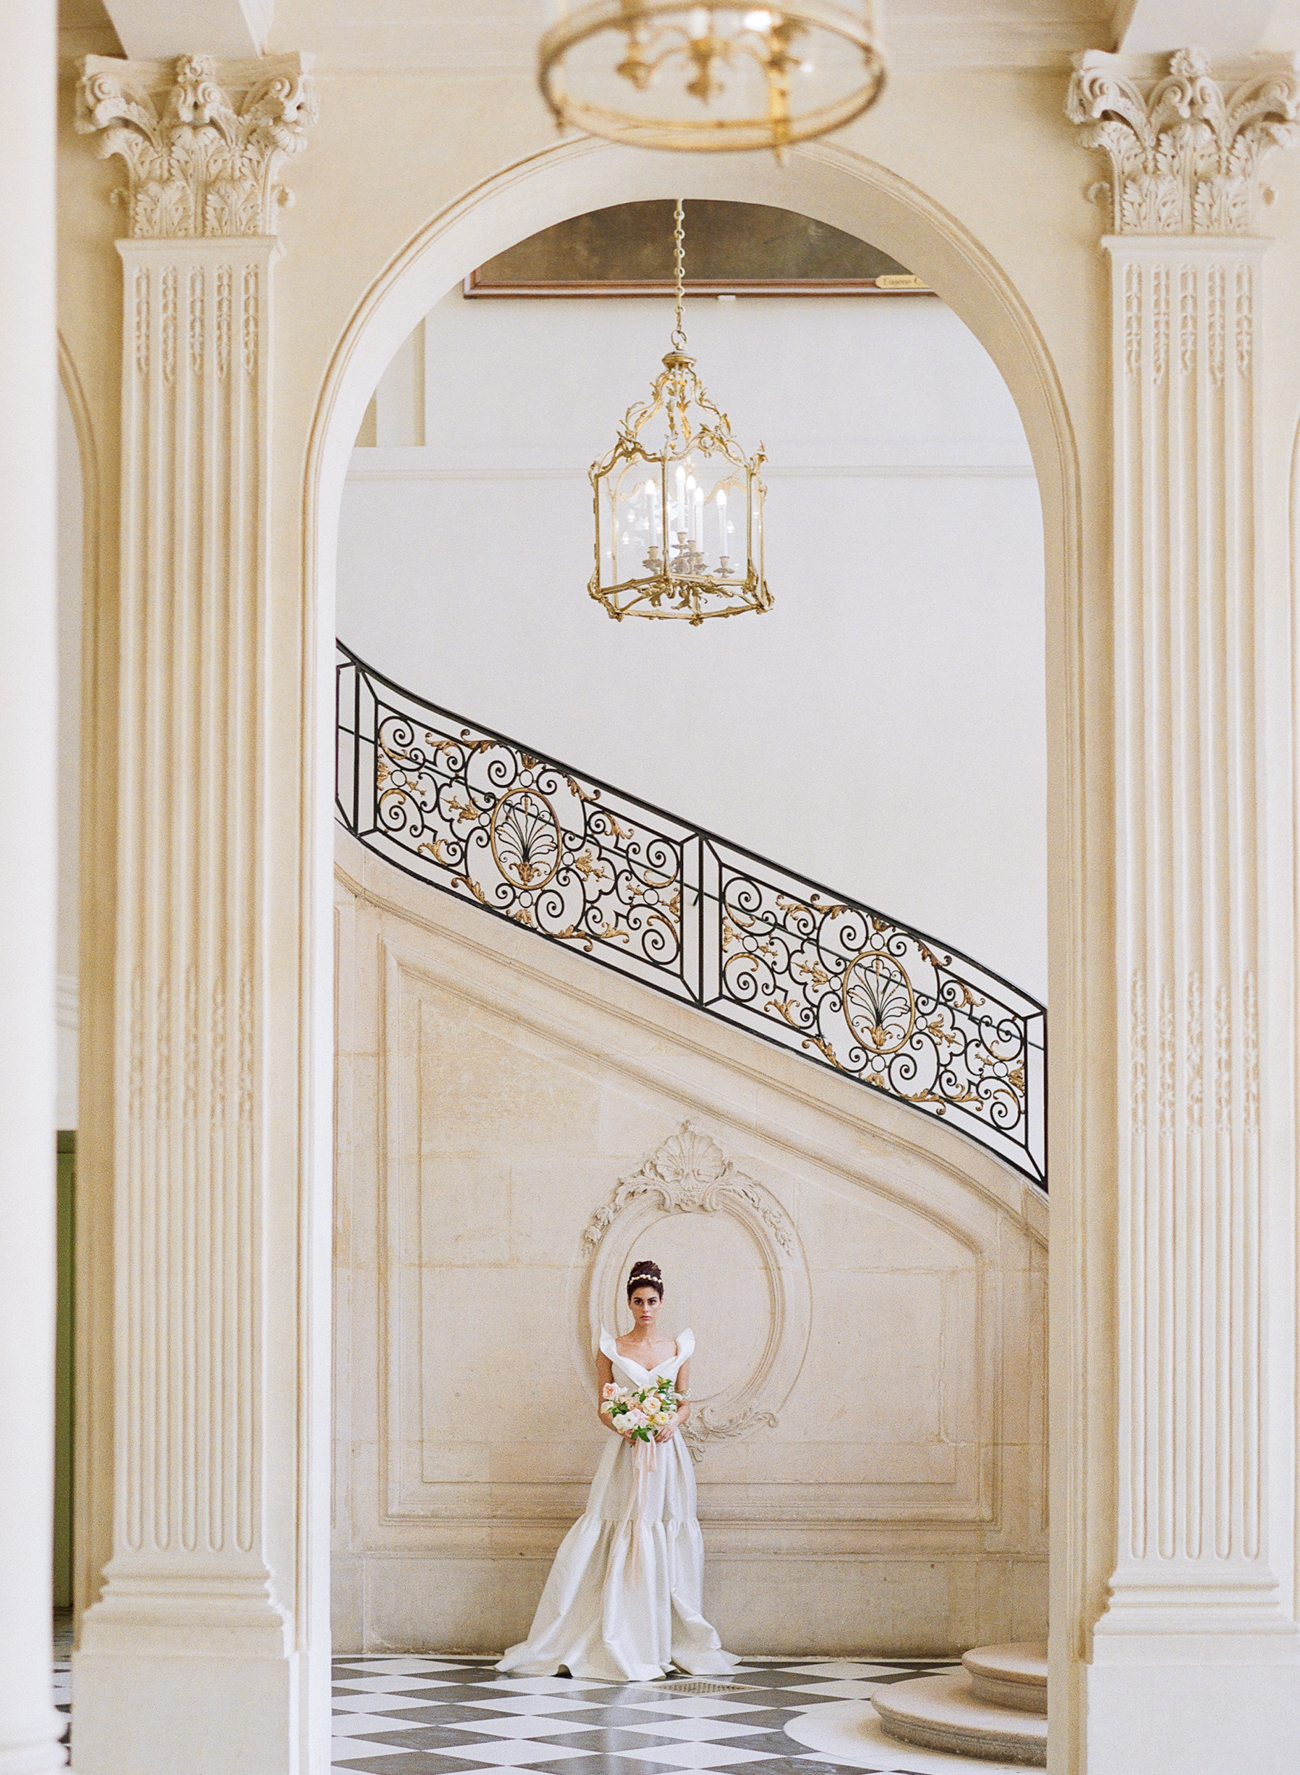 Musee Rodin Wedding Photographer | Paris Garden Wedding Photography | Paris Film Photographer | France Wedding Photography | Molly Carr Photography | Paris Outdoor Wedding | Lihi Hod Wedding Dress